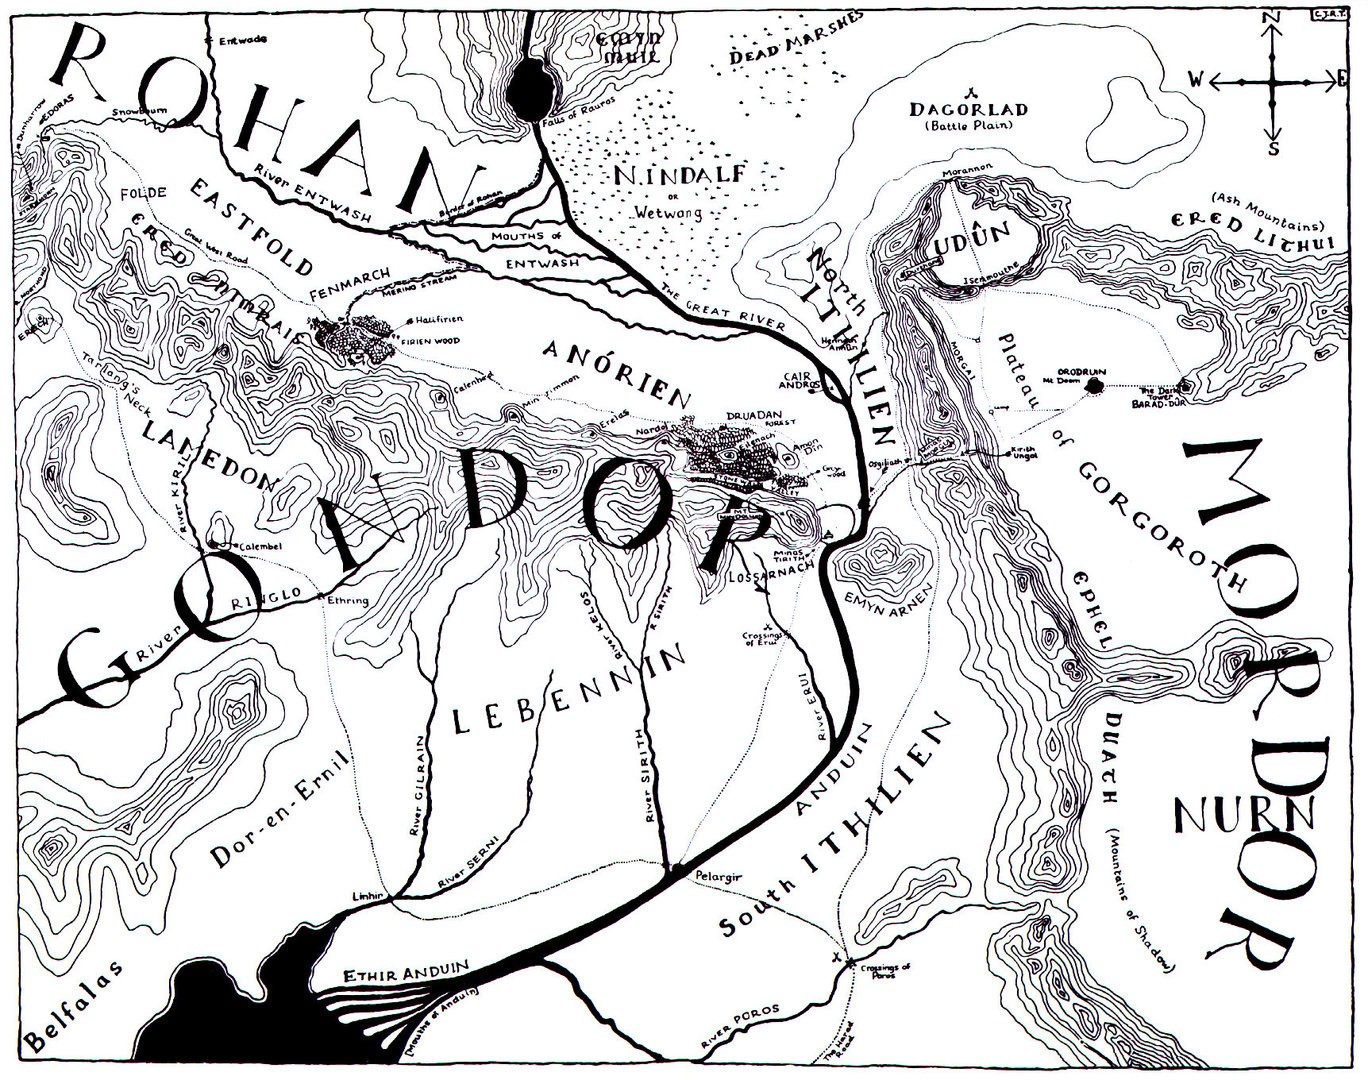 gondor_map.jpg